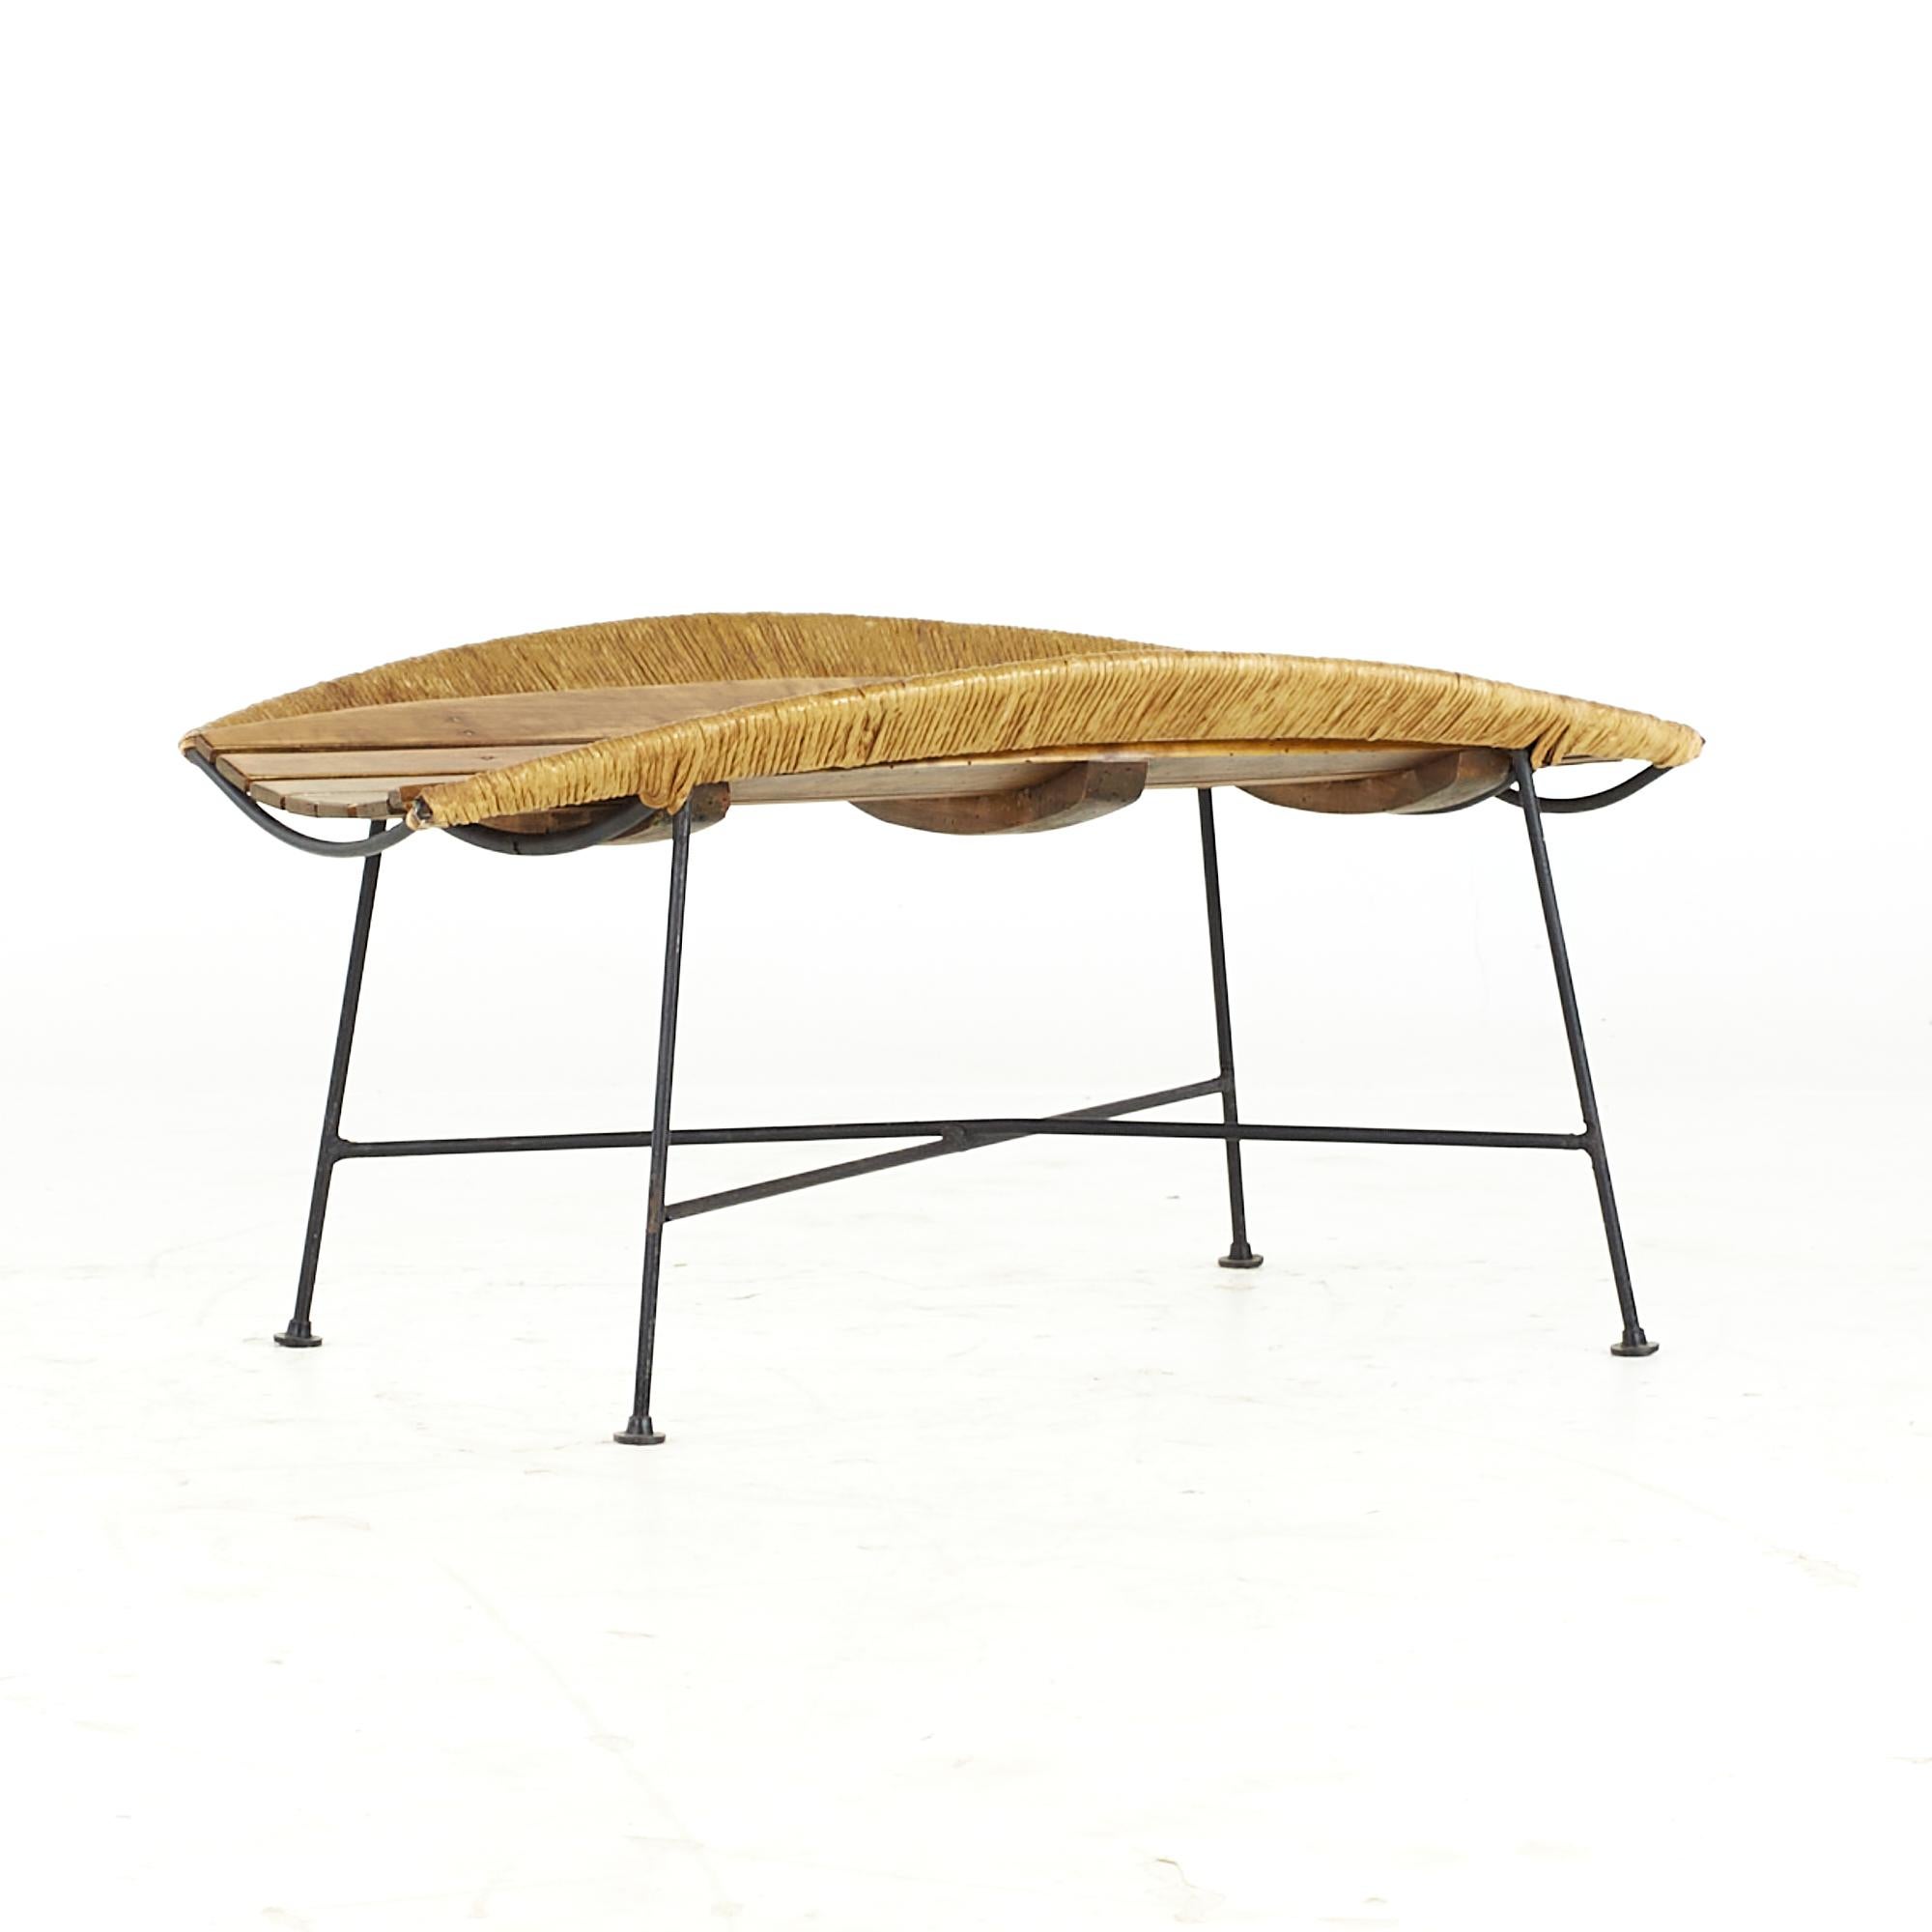 Fin du 20e siècle Arthur Umanoff Mid Century Iron and Rattan Catchall Table Stool (tabouret de table) en vente